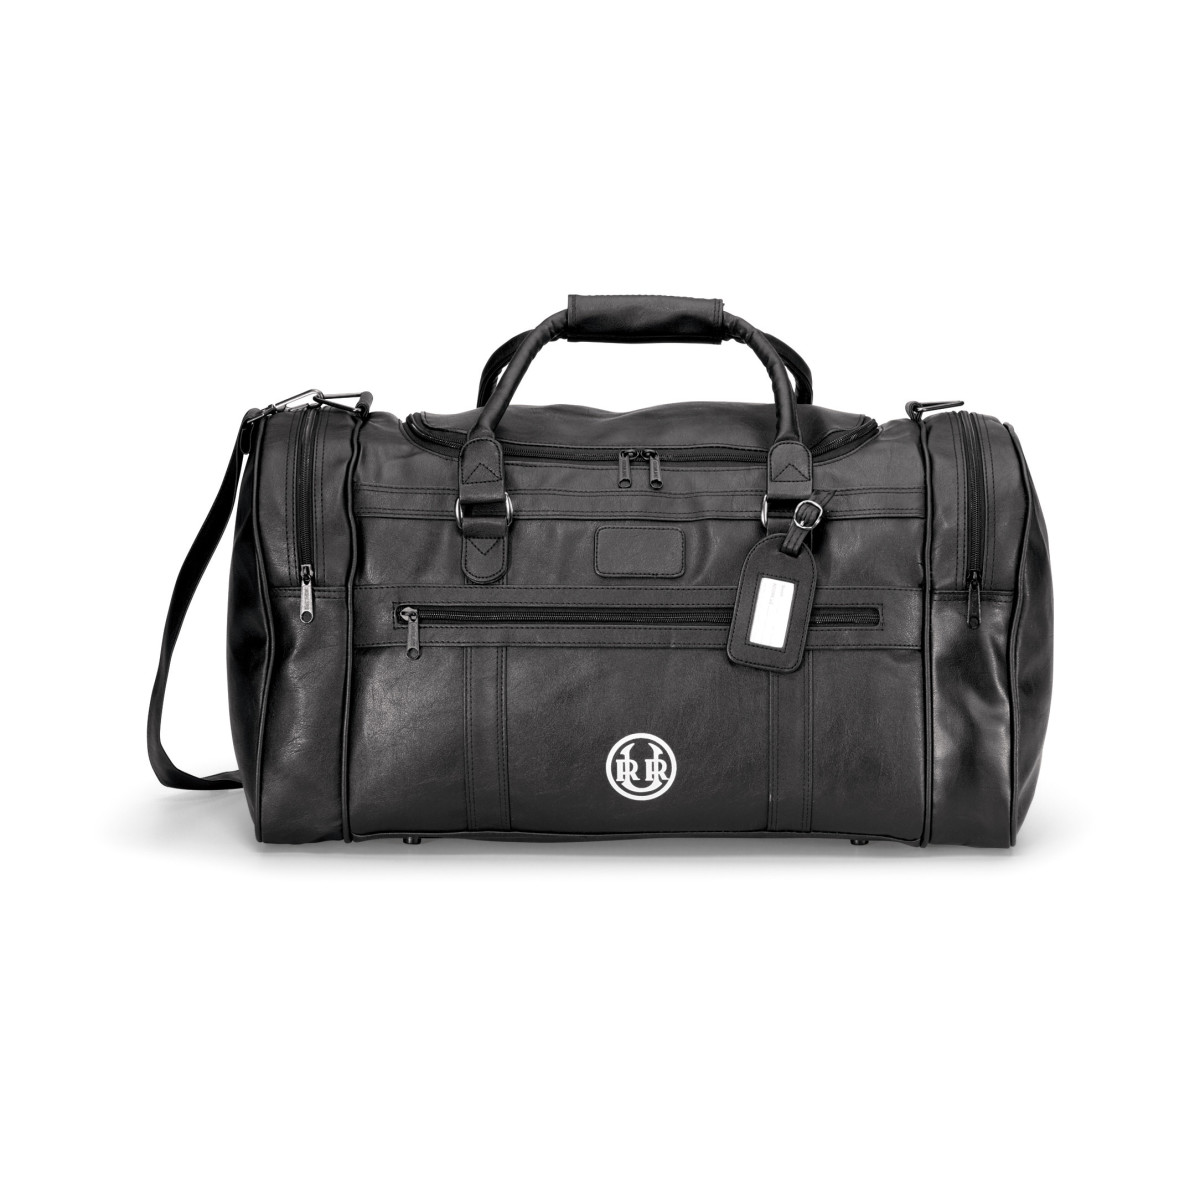 Gemline 4705 - Large Executive Travel Bag